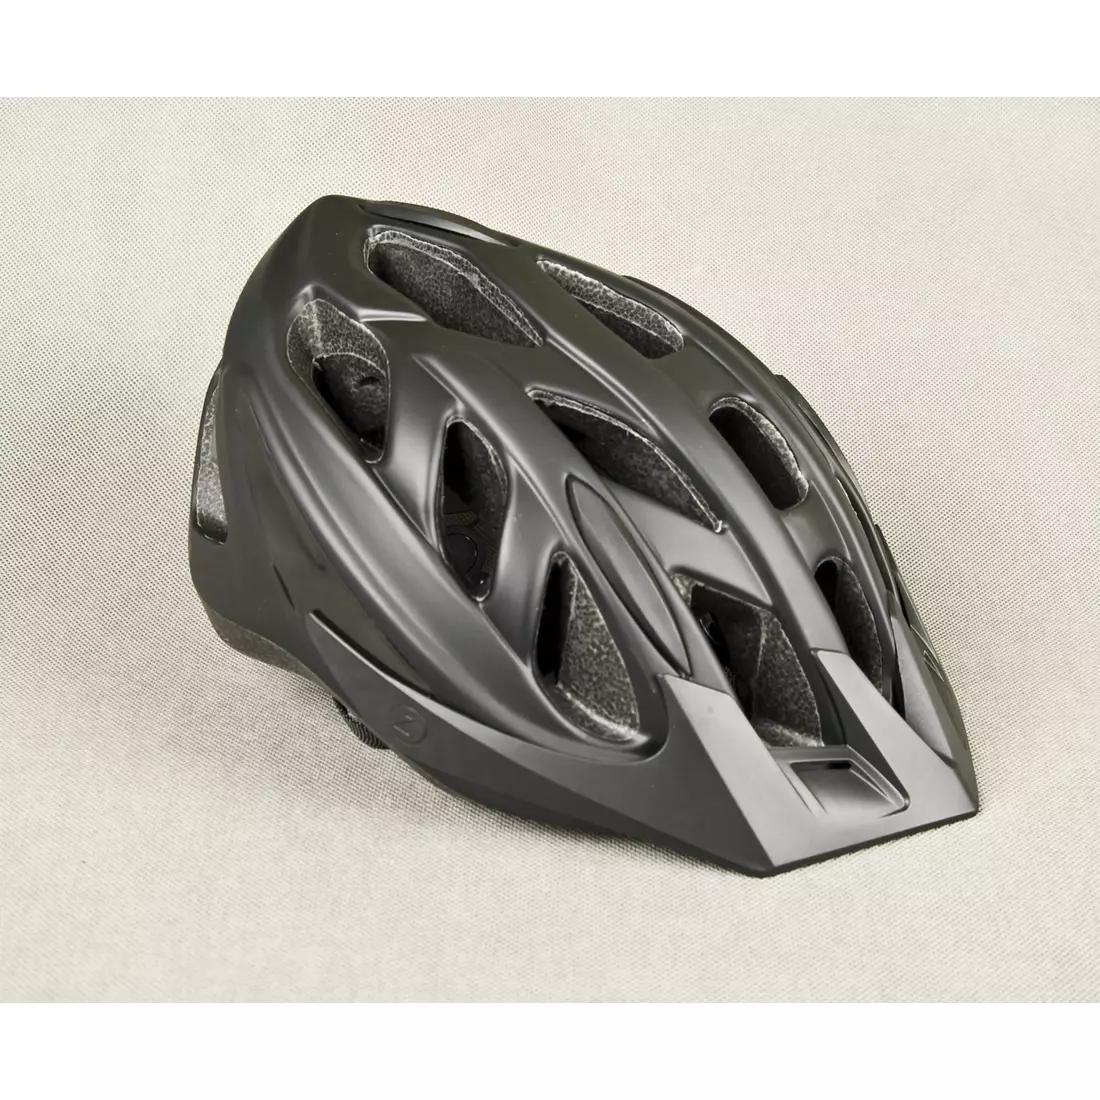 LAZER - CYCLONE MTB bicycle helmet, color: black matt